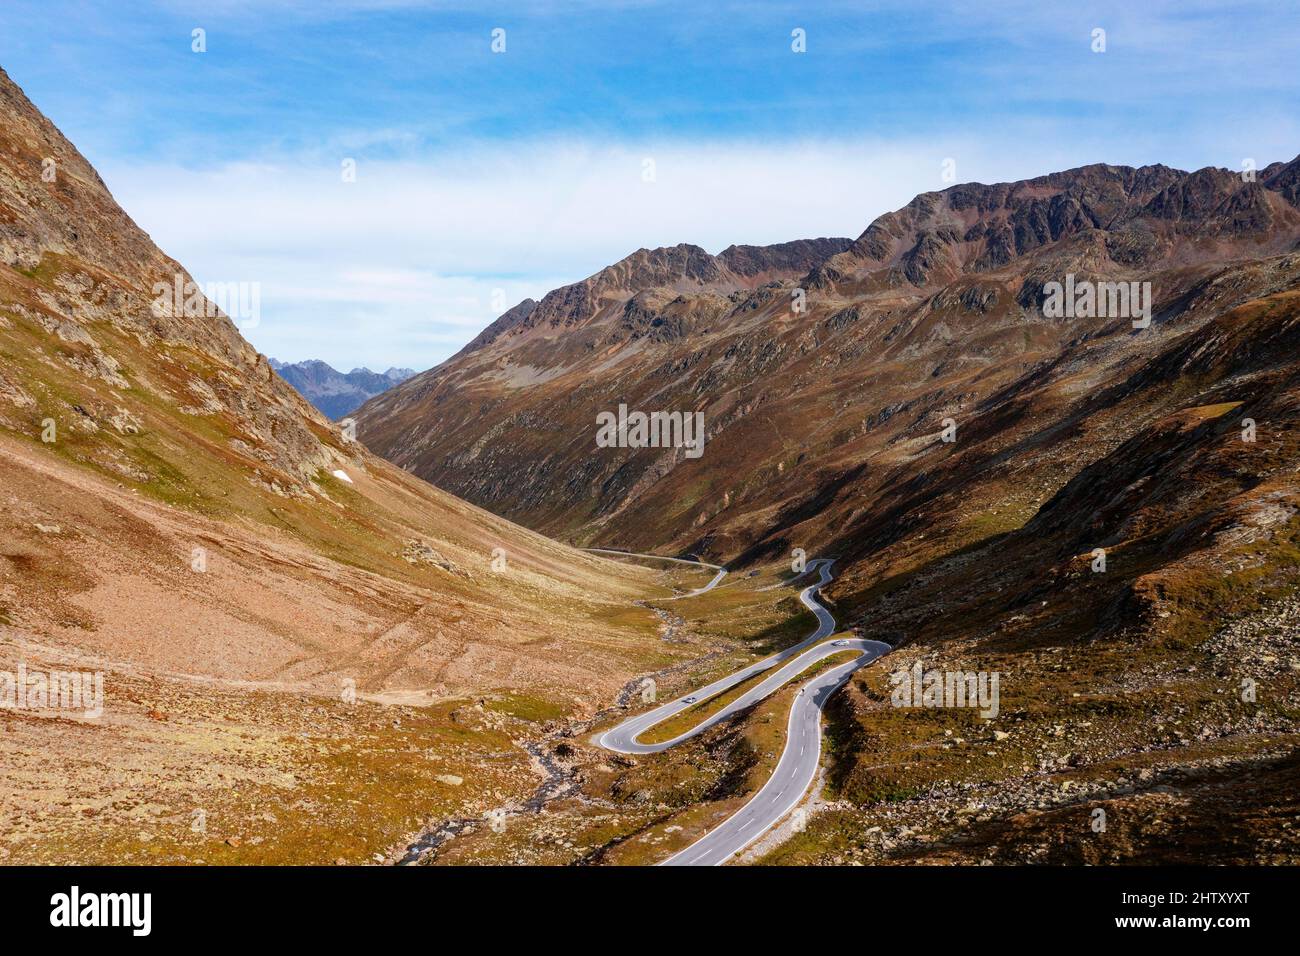 Timmelsjoch High Alpine Road, Passo del Rombo, Pass Road entre Tyrol et Tyrol du Sud, Alpes d'Oetztal, Oetztal, Tyrol, Autriche Banque D'Images